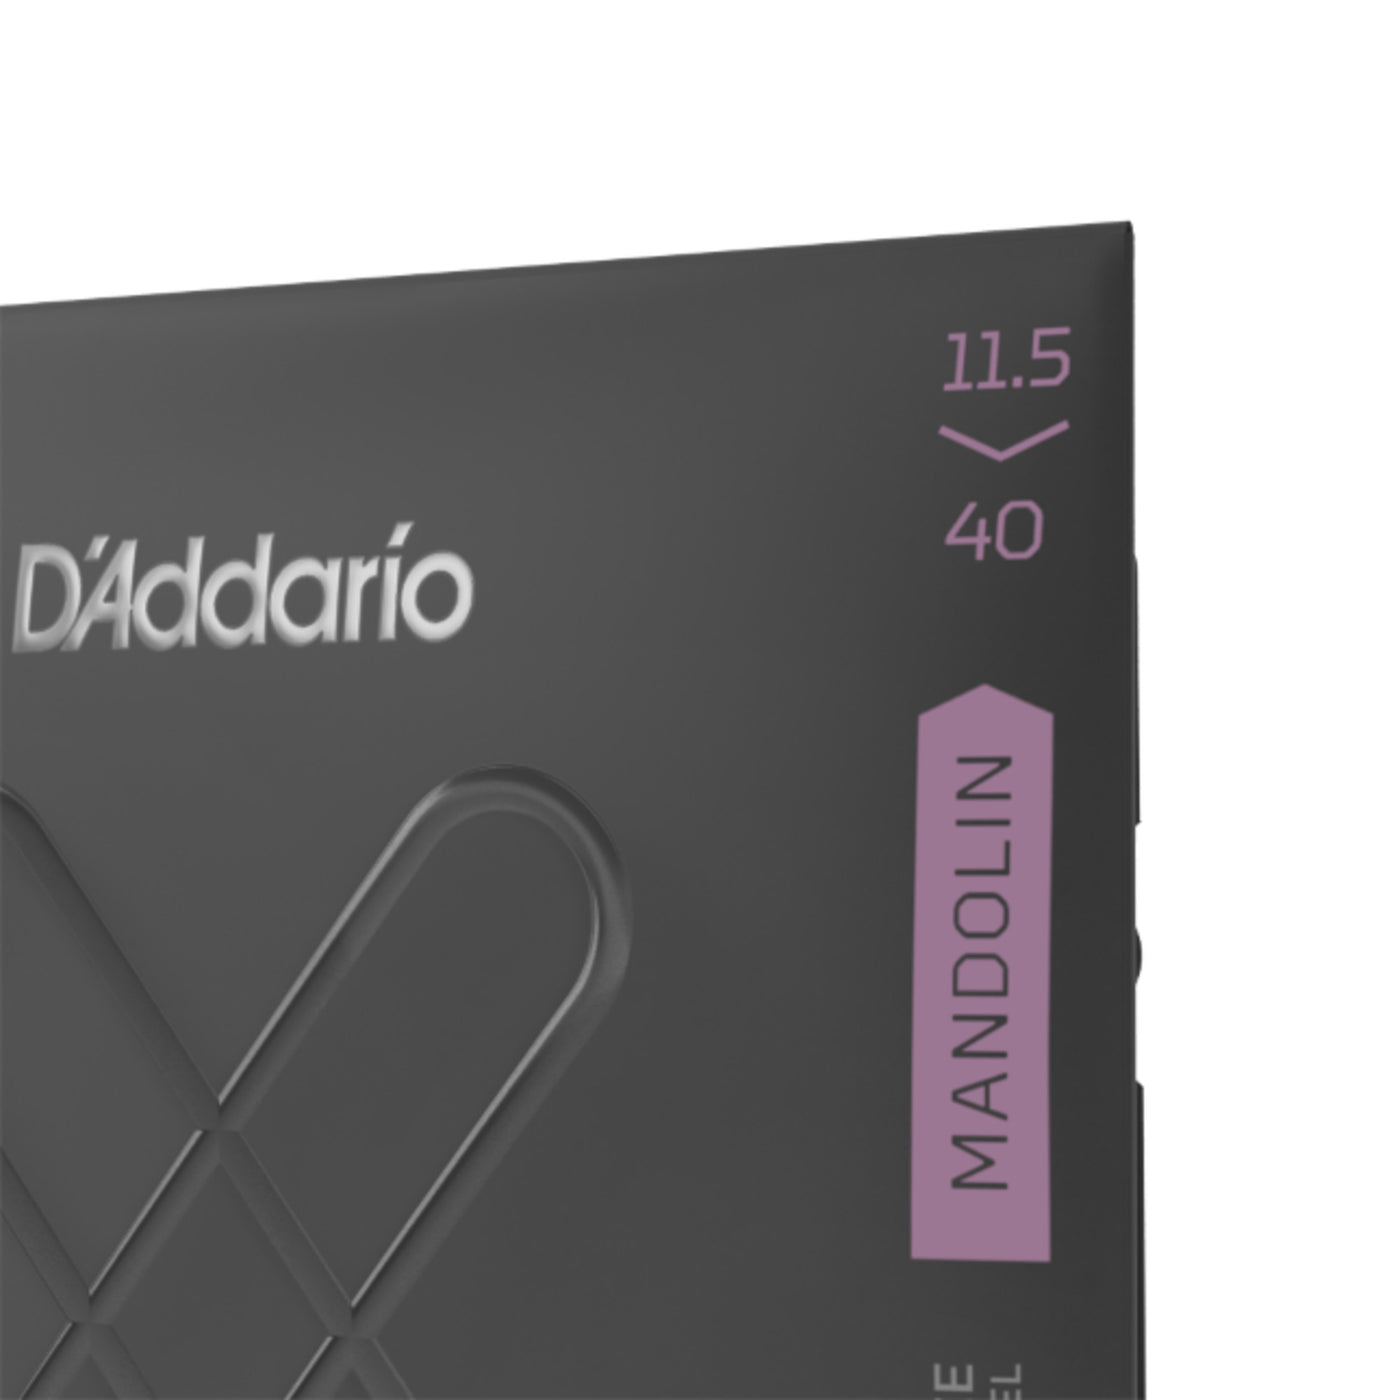 D'Addario XT Phosphor Bronze Mandolin Strings, Custom Medium, 11.5-40 (XTM11540)